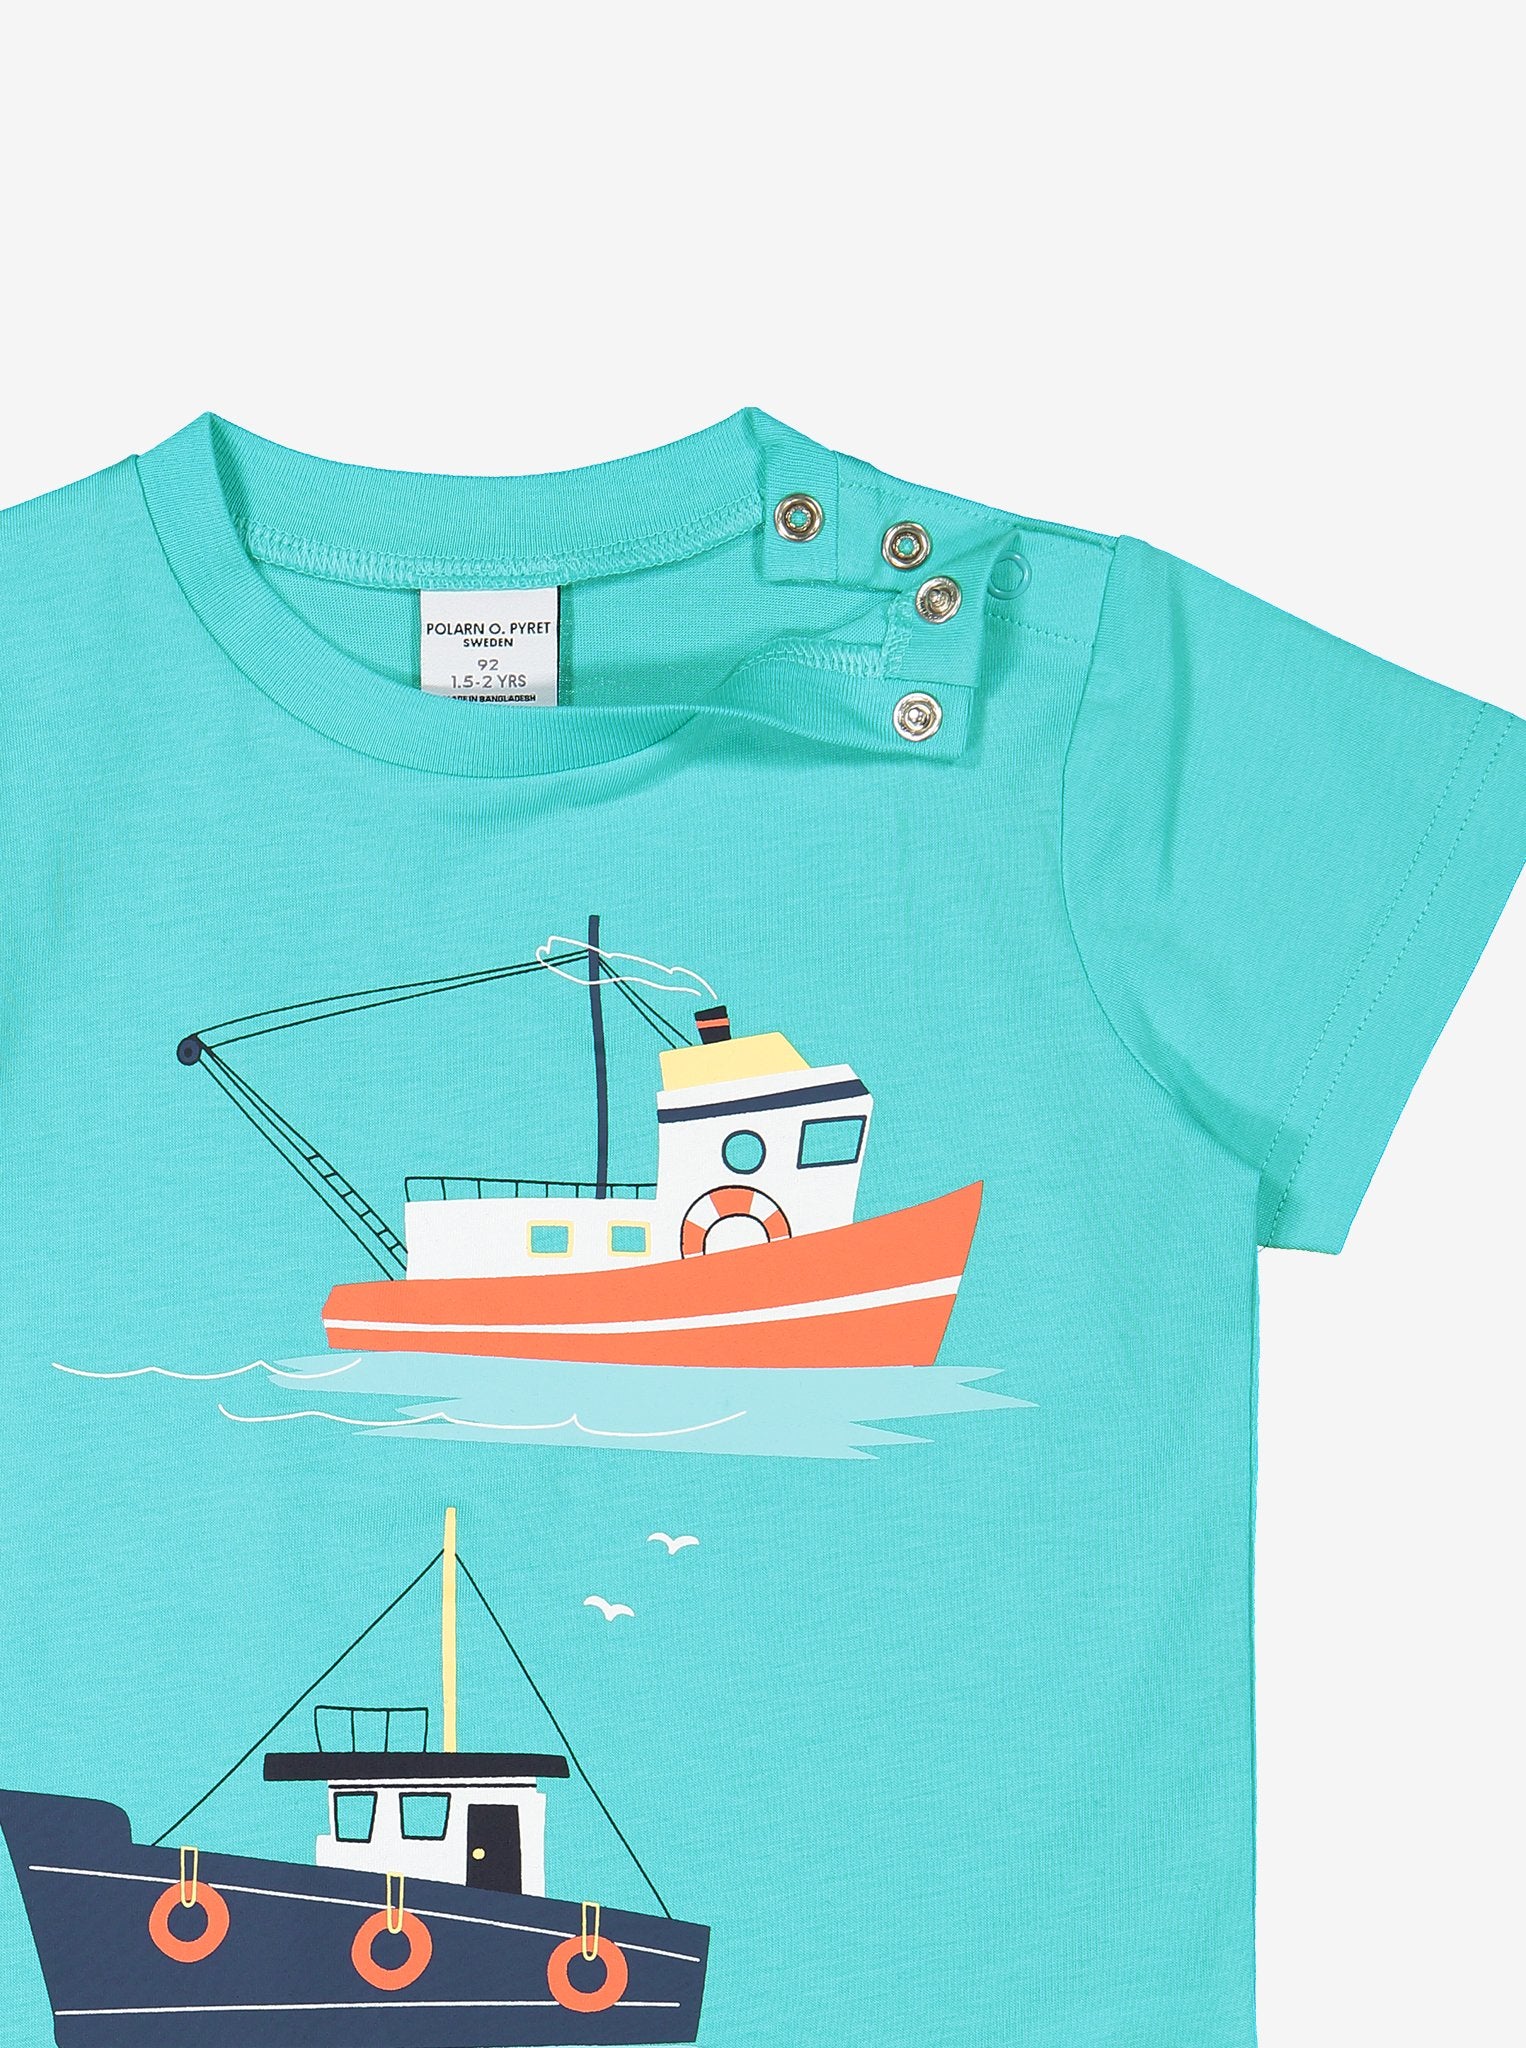 Boat Print Kids T-Shirt